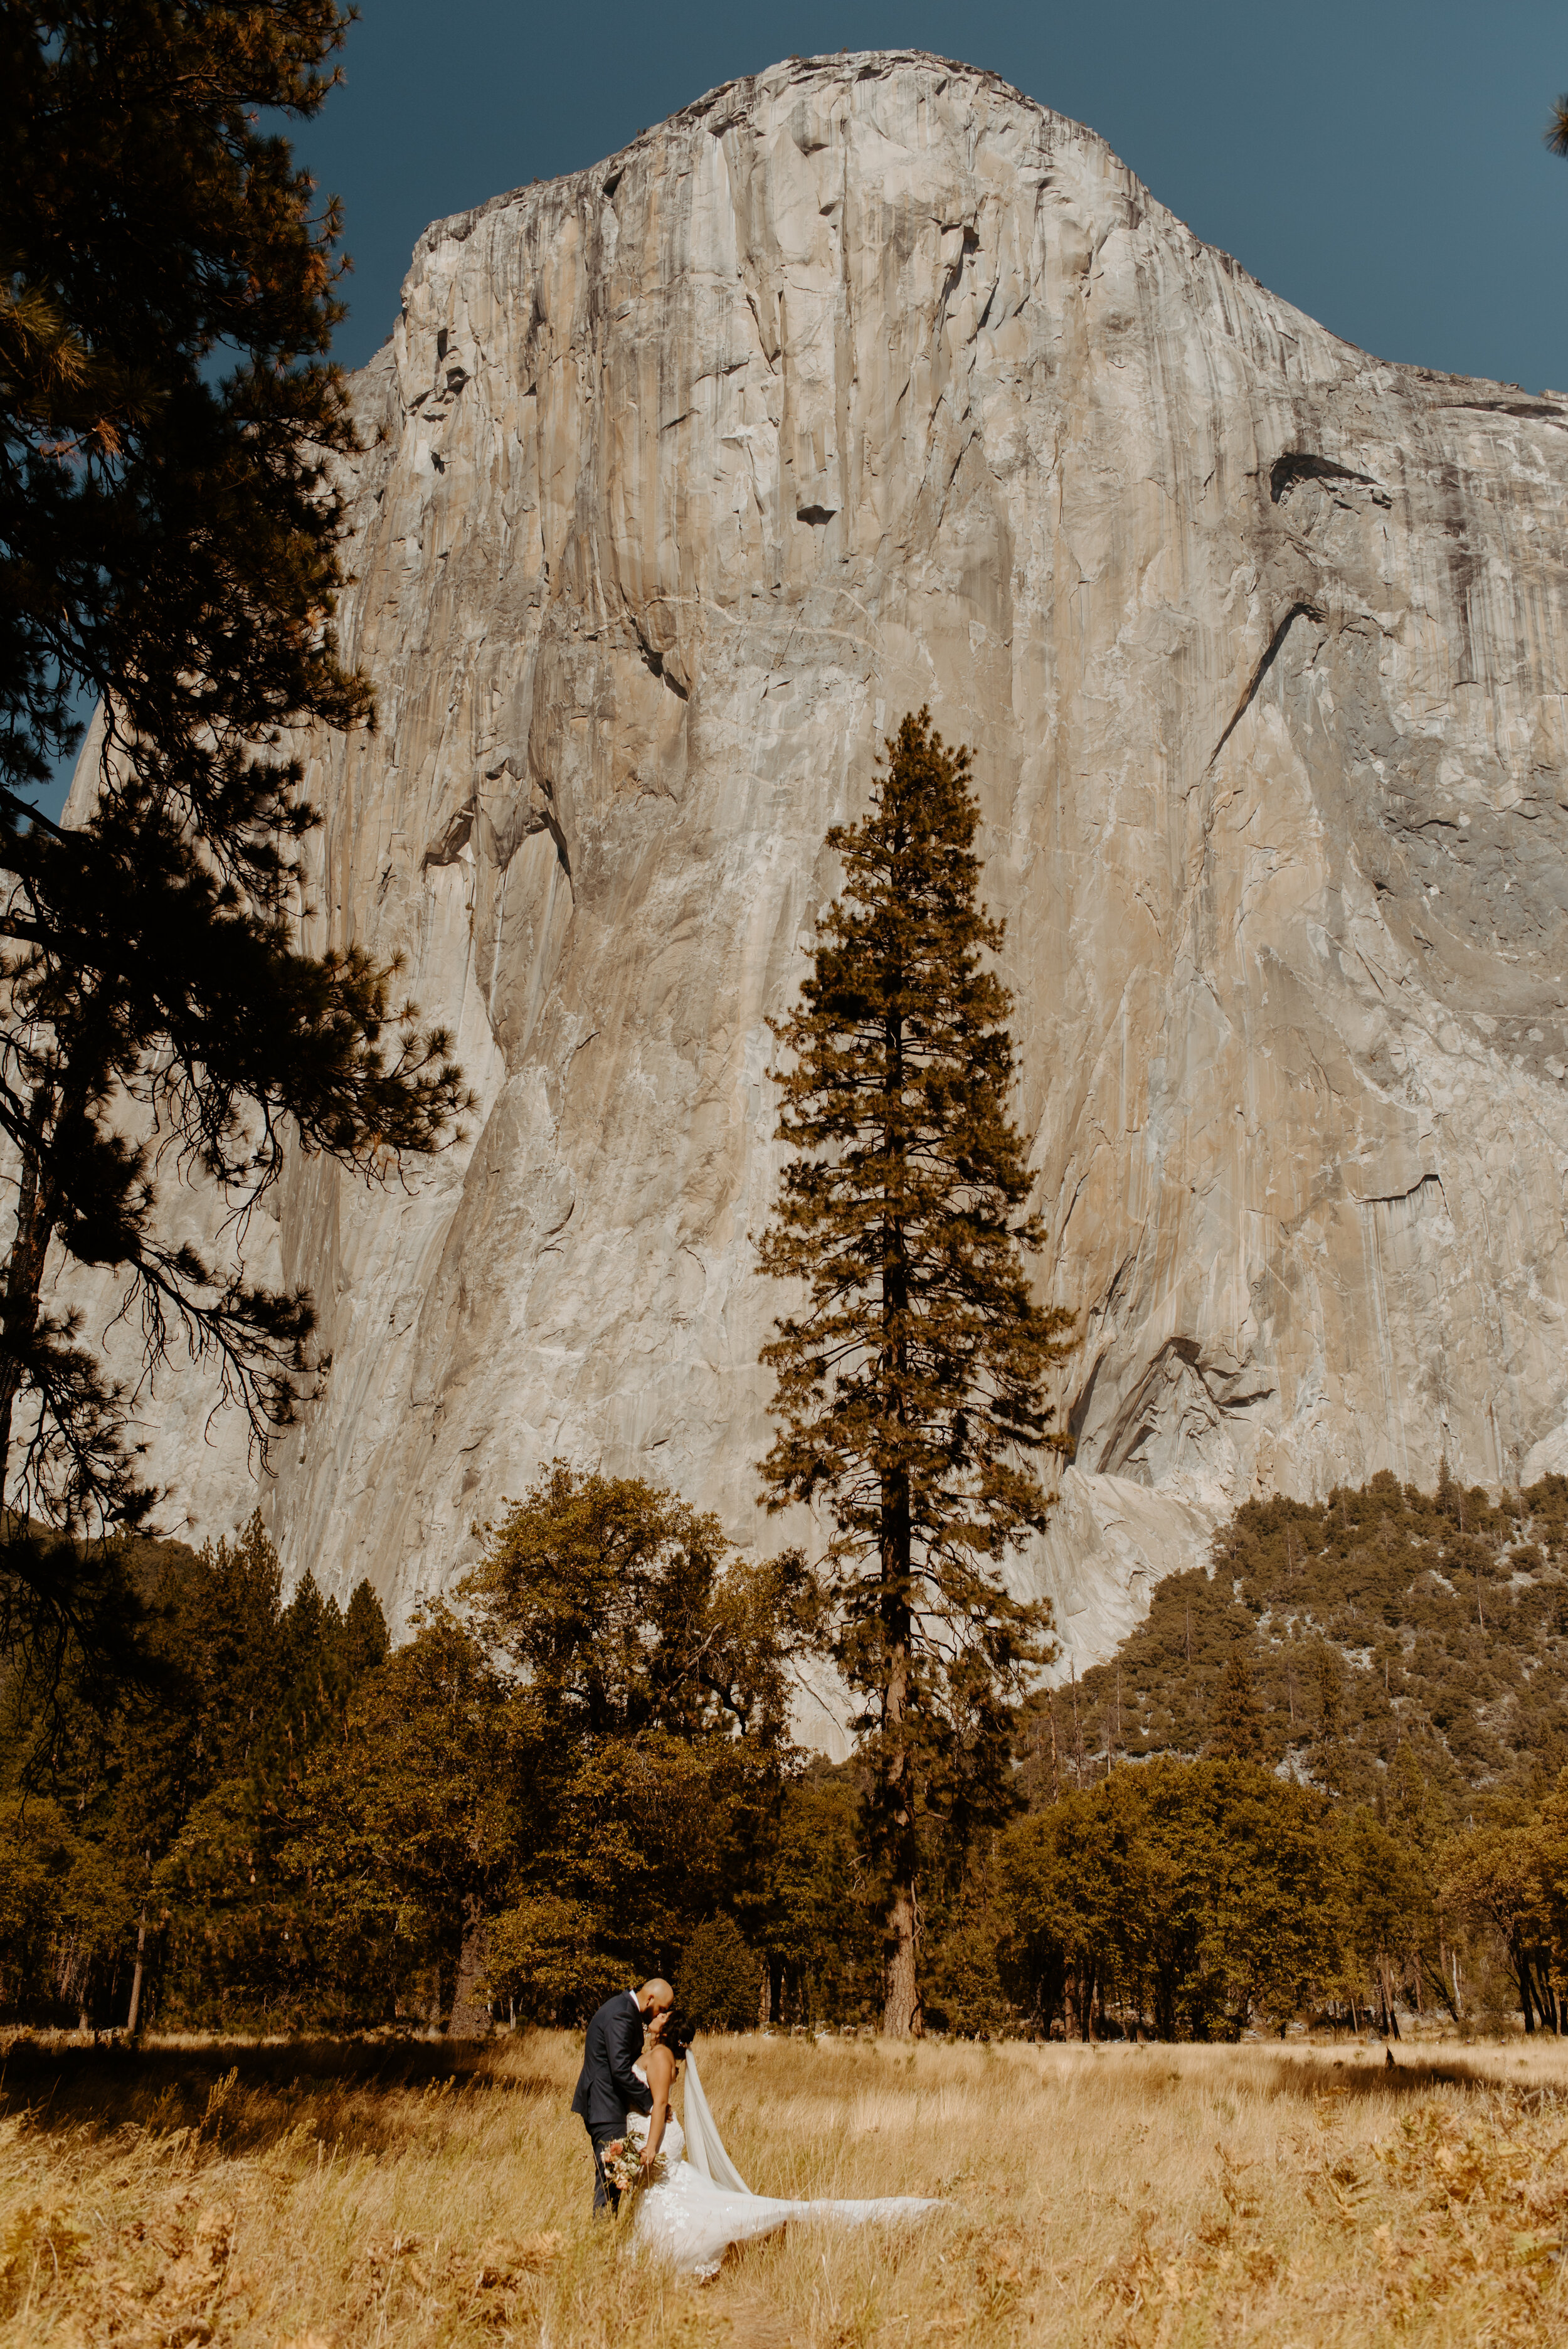 Glacier Point Elopement | Yosemite National Park Elopement and Wedding Photographer | Sunrise adventure elopement | California Elopement Photographer | El Capitan Meadow